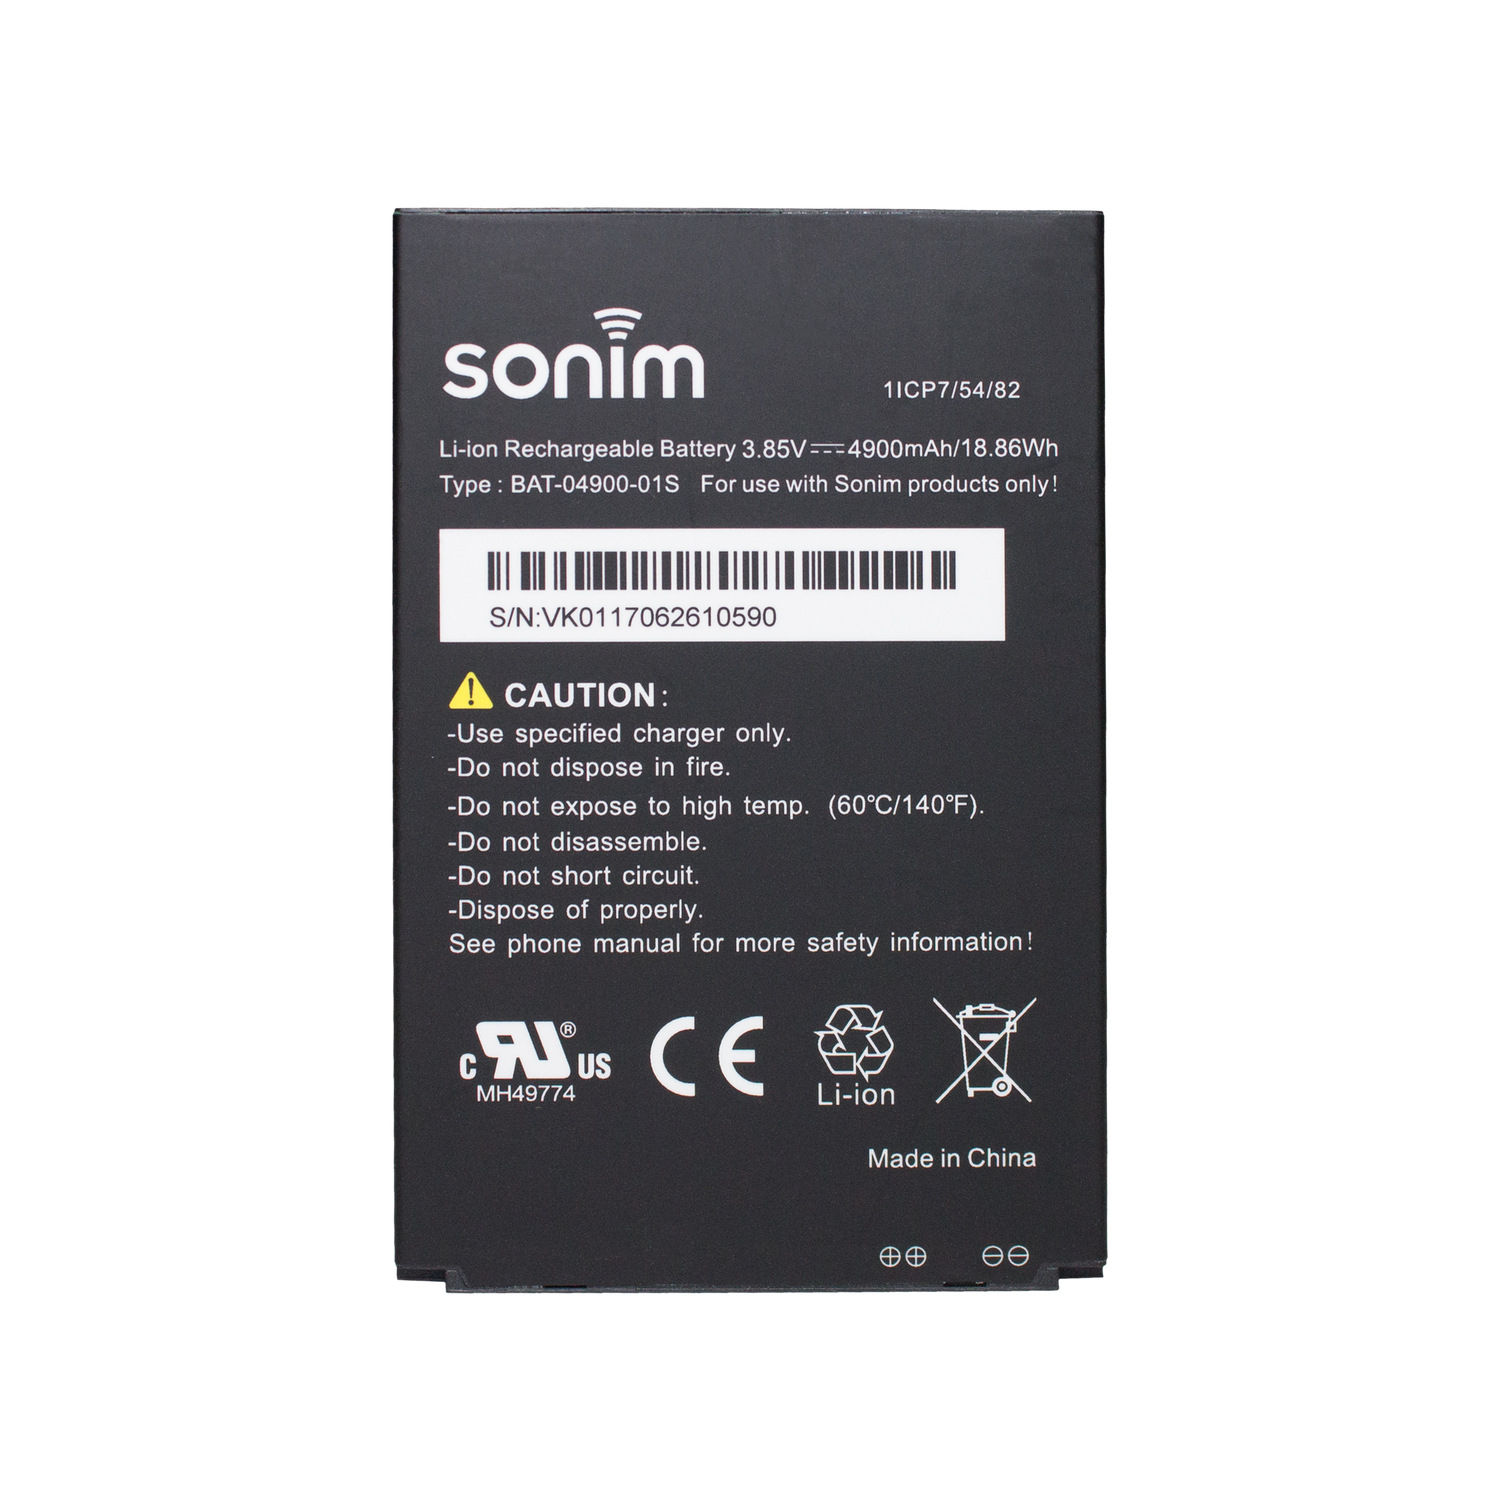 Sonim 4900 mAh Battery for XP8 Phone. 